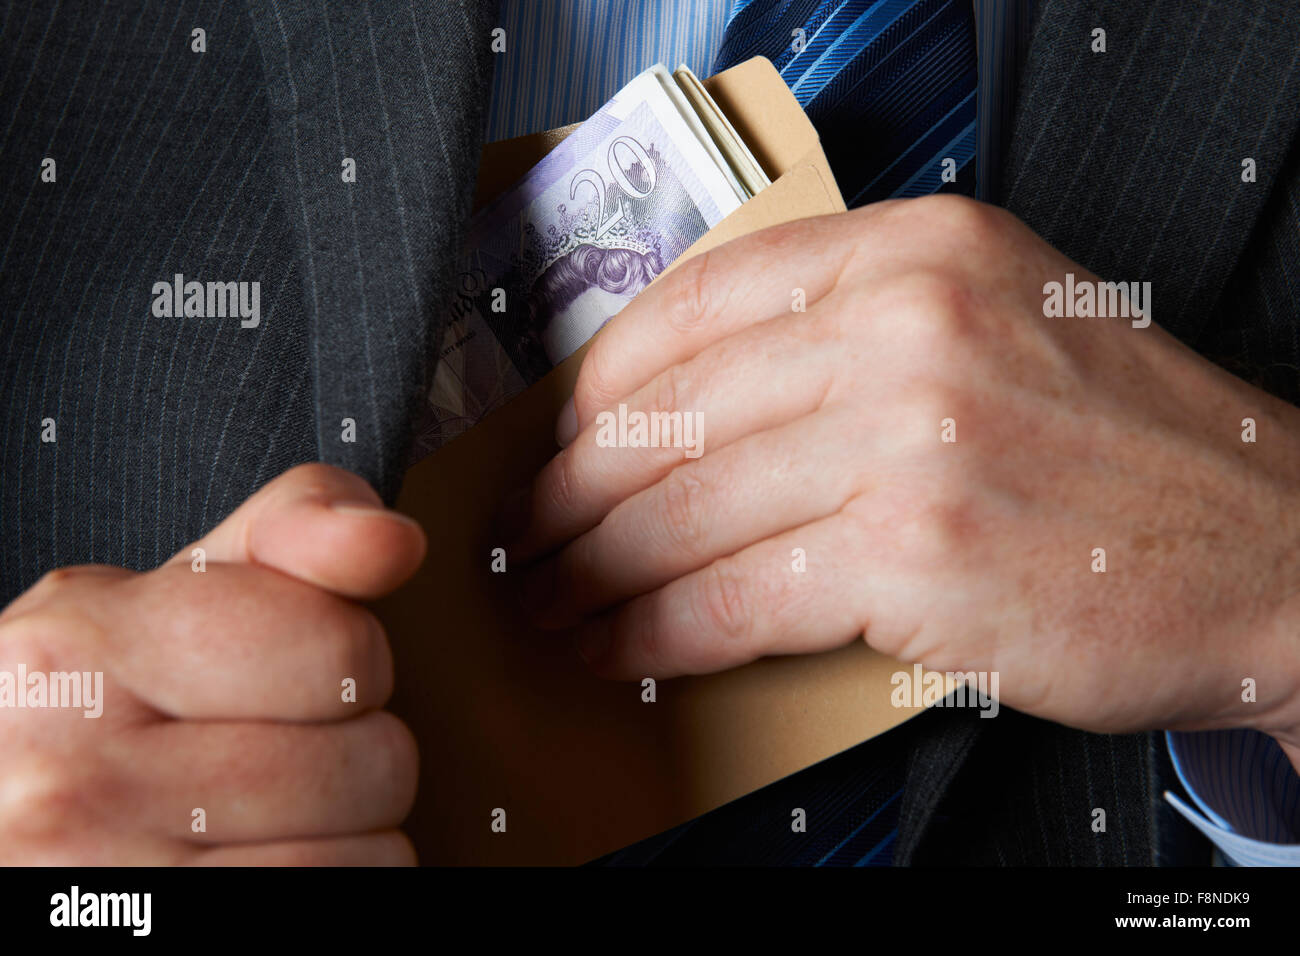 Businessman Putting Envelope Filled With Sterling In Jacket Pocket Stock Photo